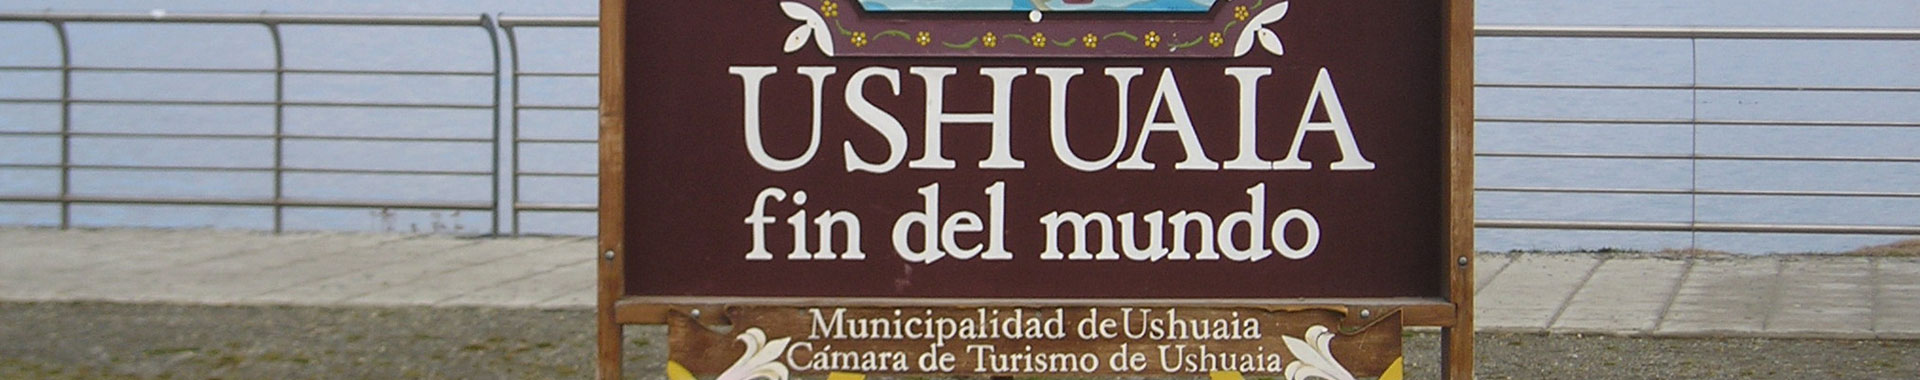 Argentina - Ushuaia - Paquetes - Conociendo